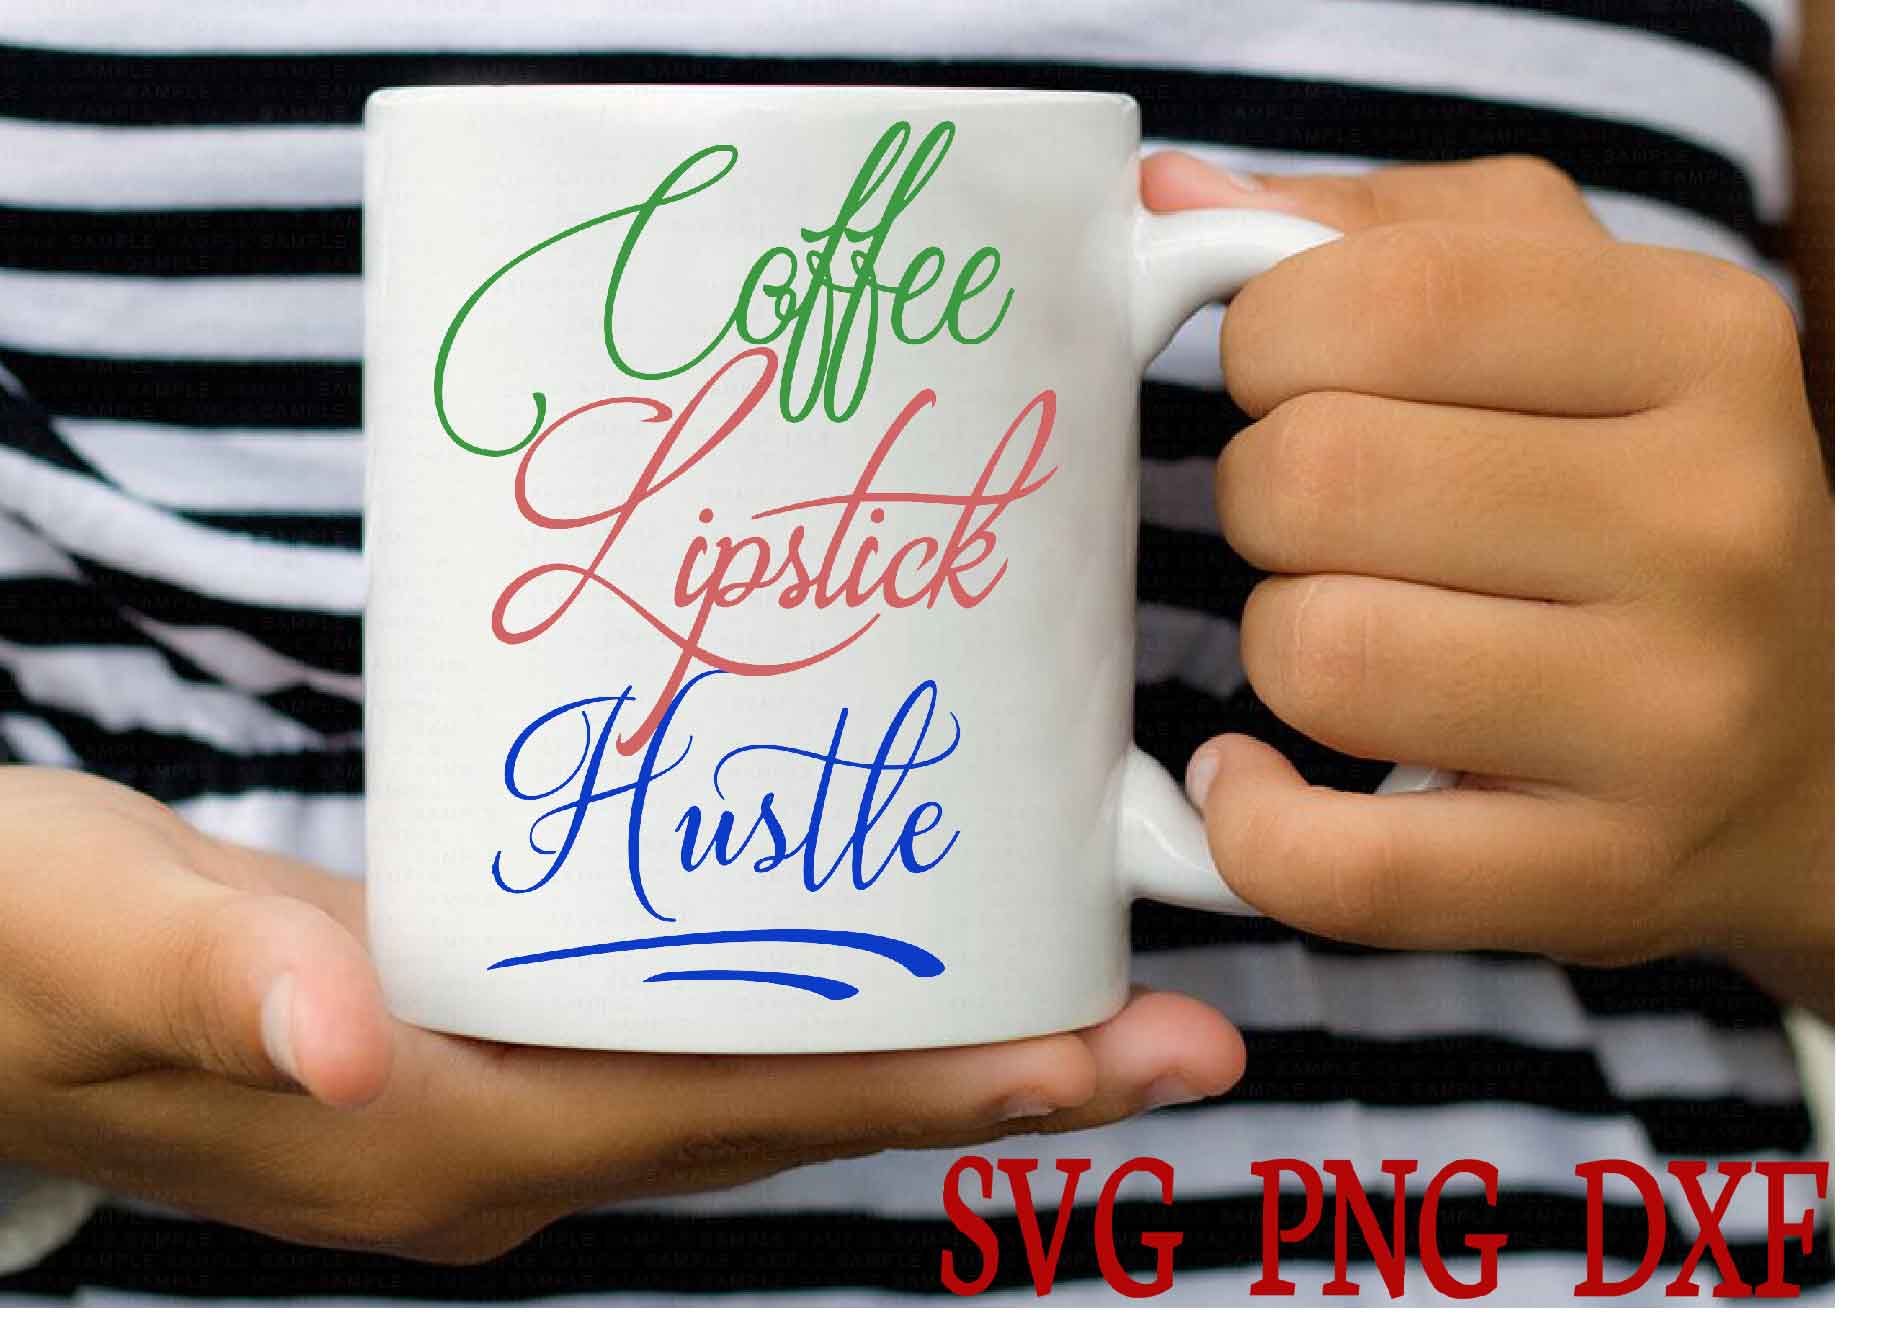 Download Coffee Lipstick Hustle SVG DXF PNG (84339) | SVGs | Design ...